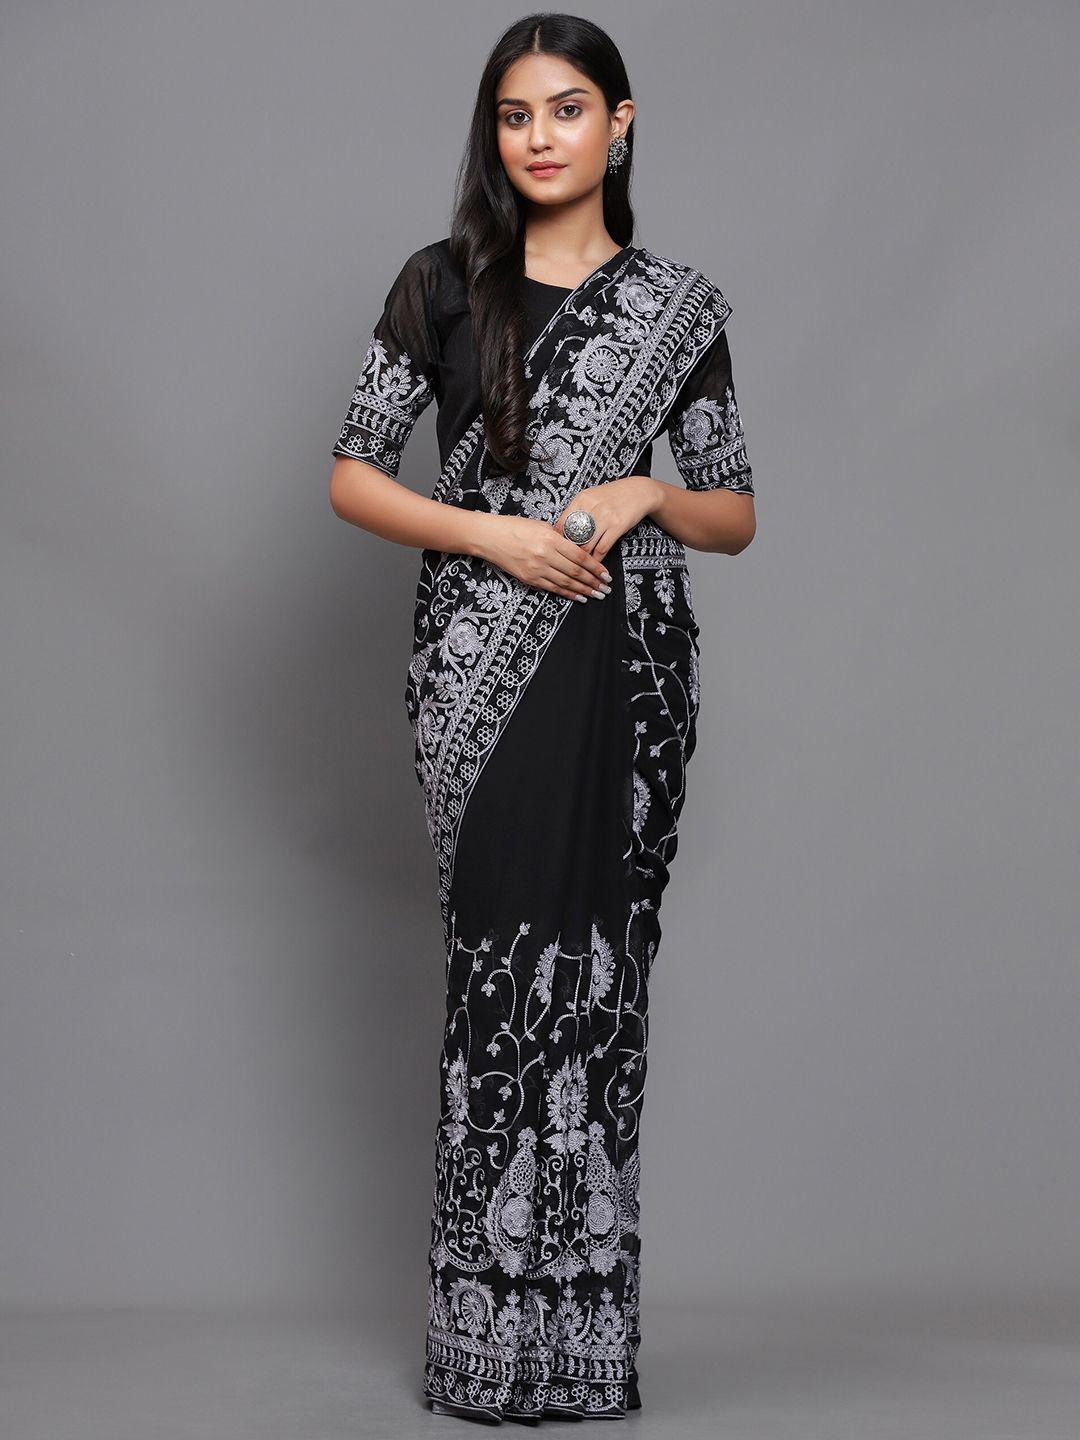 3BUDDY FASHION Black & Silver-Toned Floral Embroidered Venkatgiri Saree Price in India